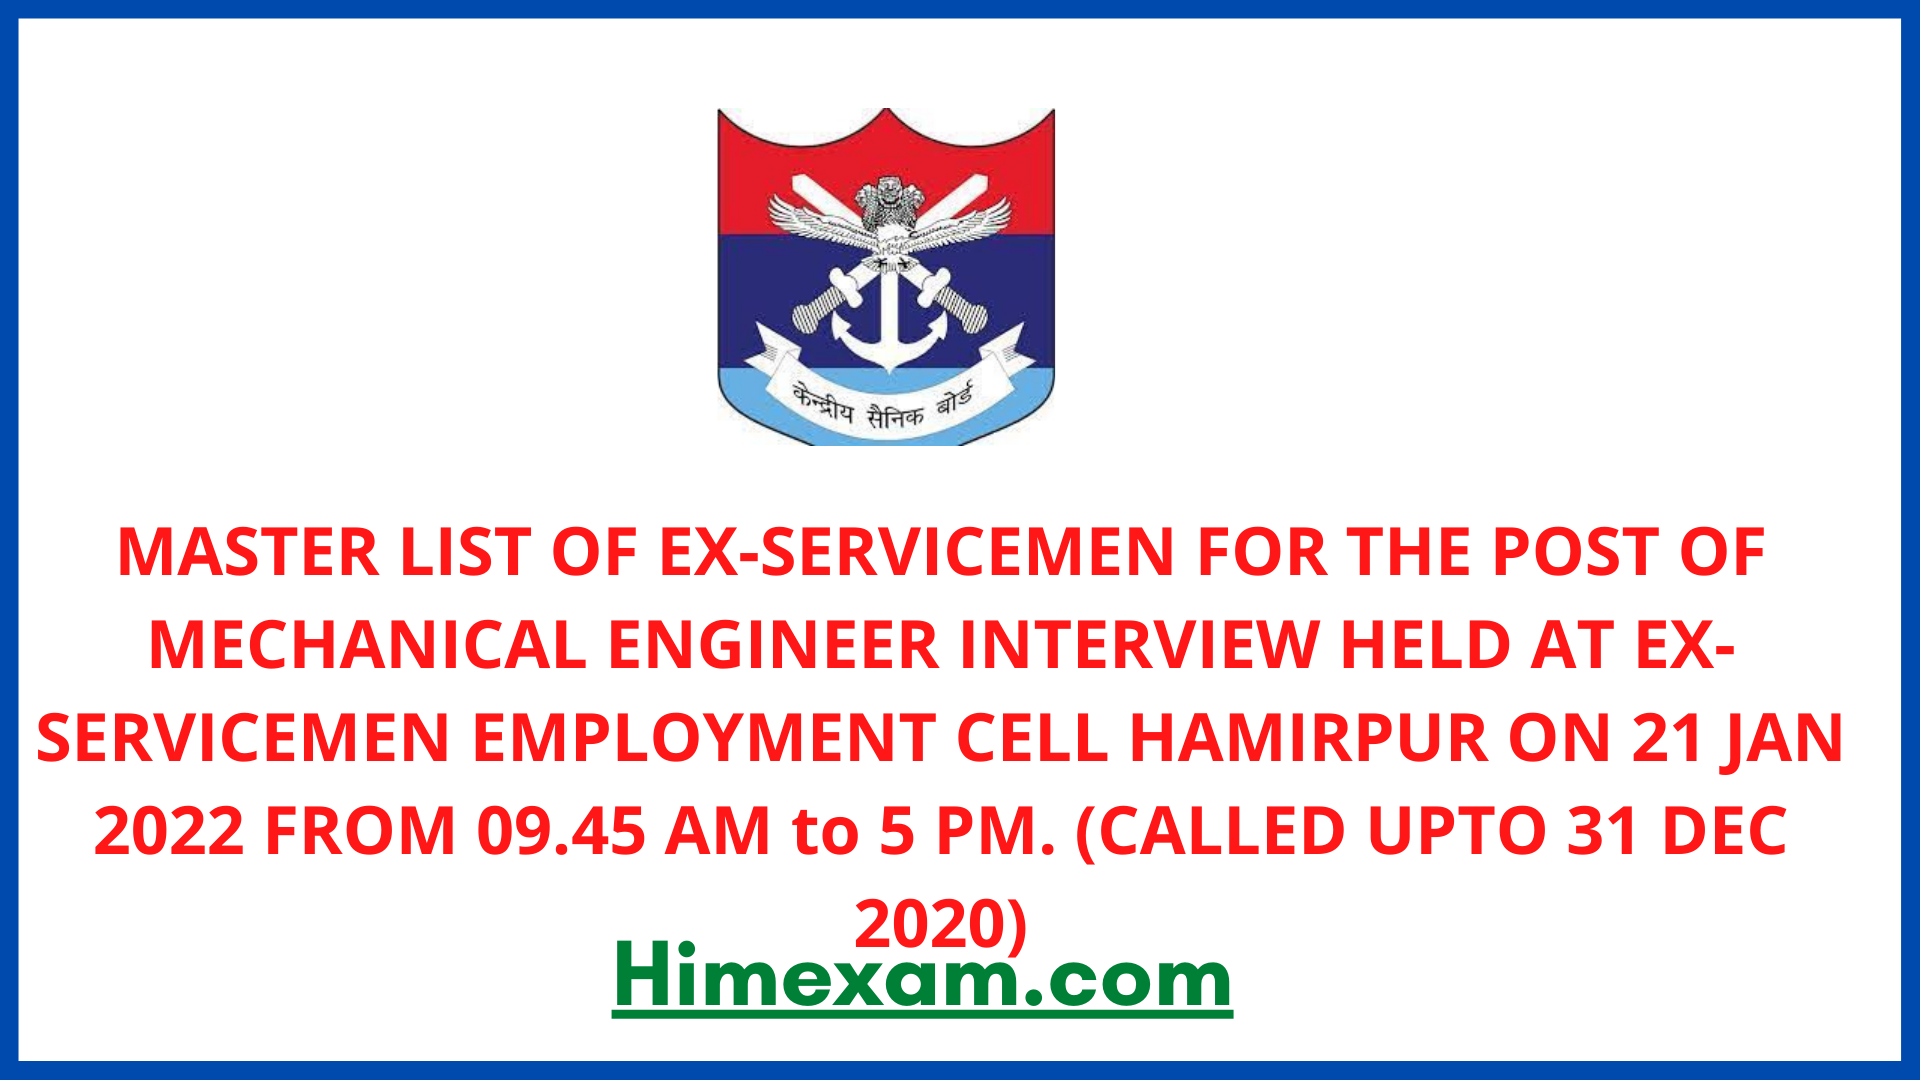 SWD Hamirpur Mechanical Engineer Interview Master List 2022